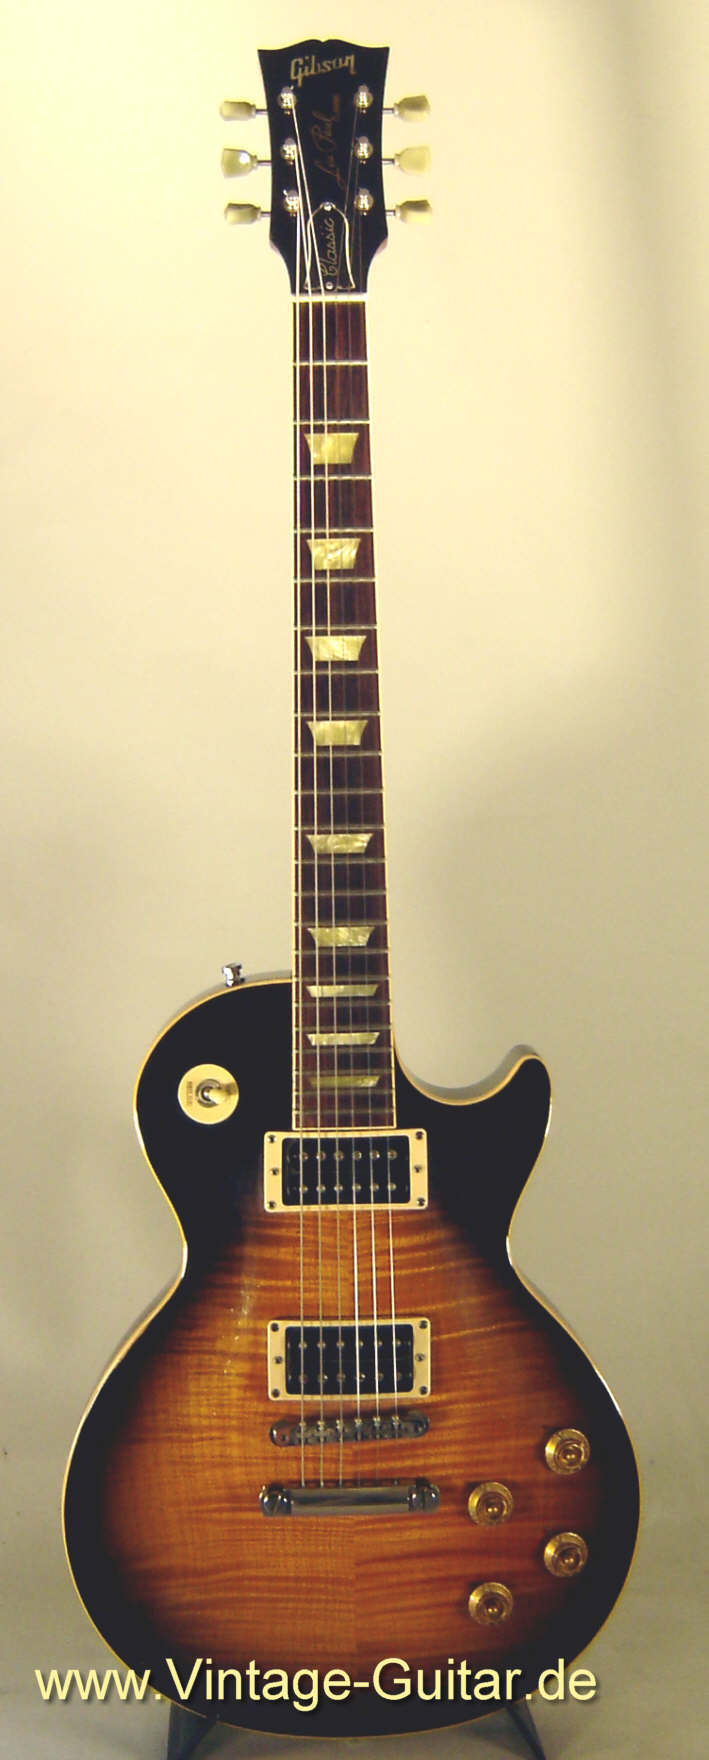 Gibson_Les-Paul_Classic_tobacco-1.jpg